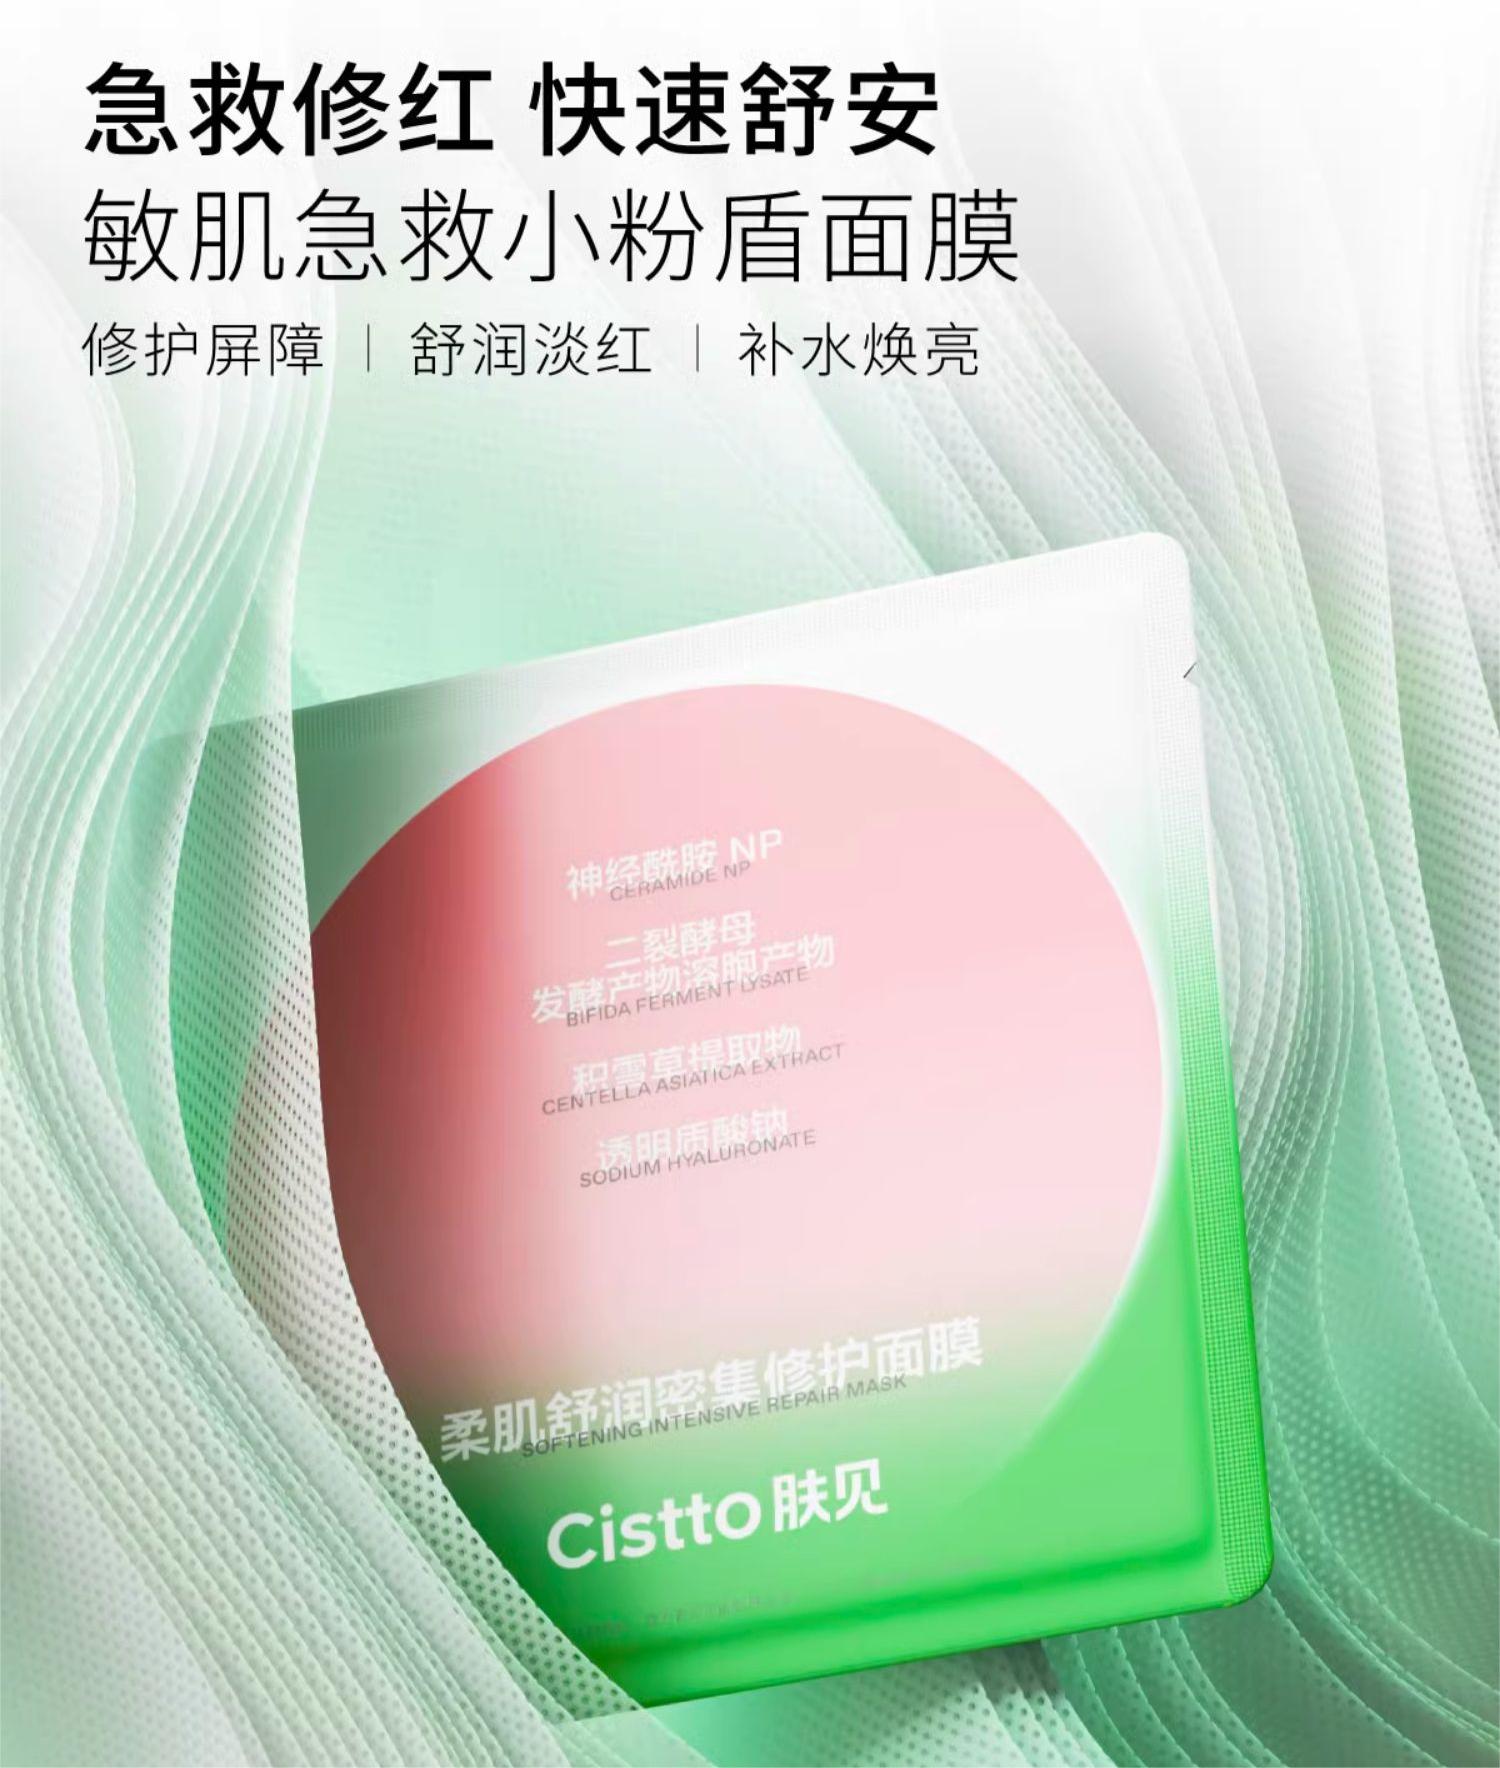 Cistto Softening Intensive Repair Mask 25ml*5 肤见柔肌舒润密集修护面膜